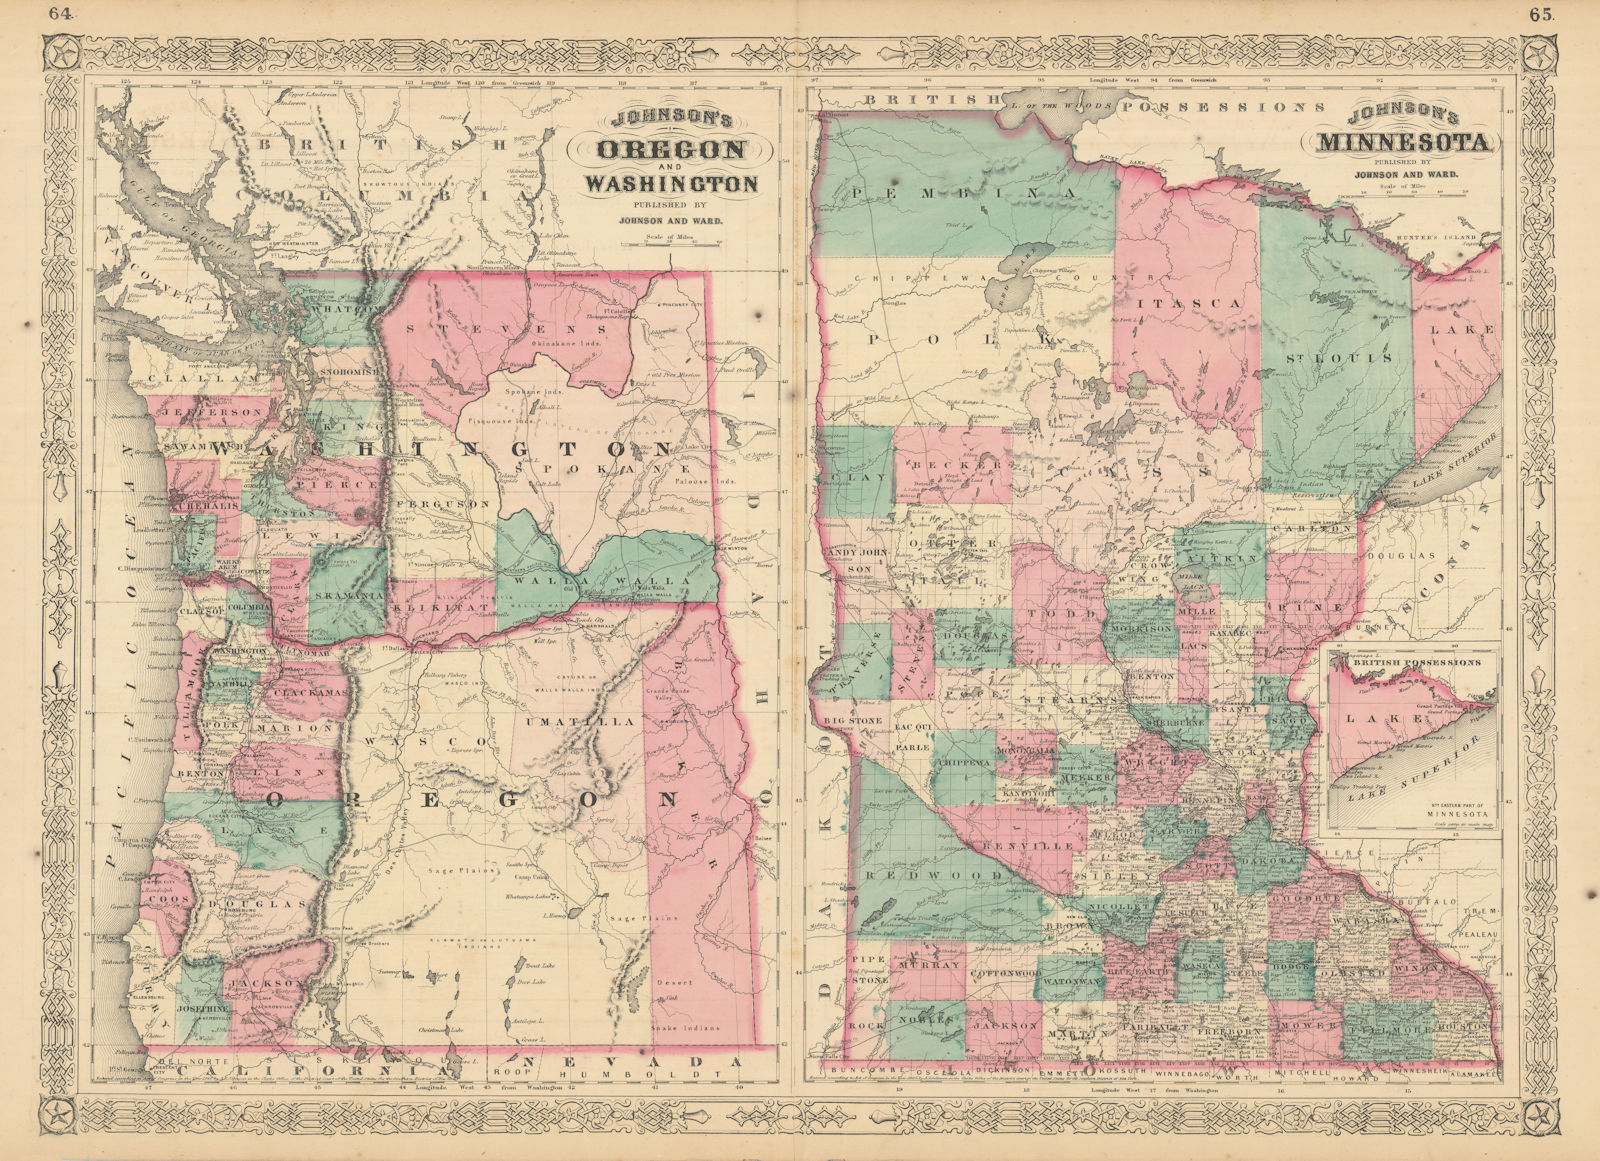 Associate Product Johnson's Oregon, Washington & Minnesota. US state map showing counties 1866